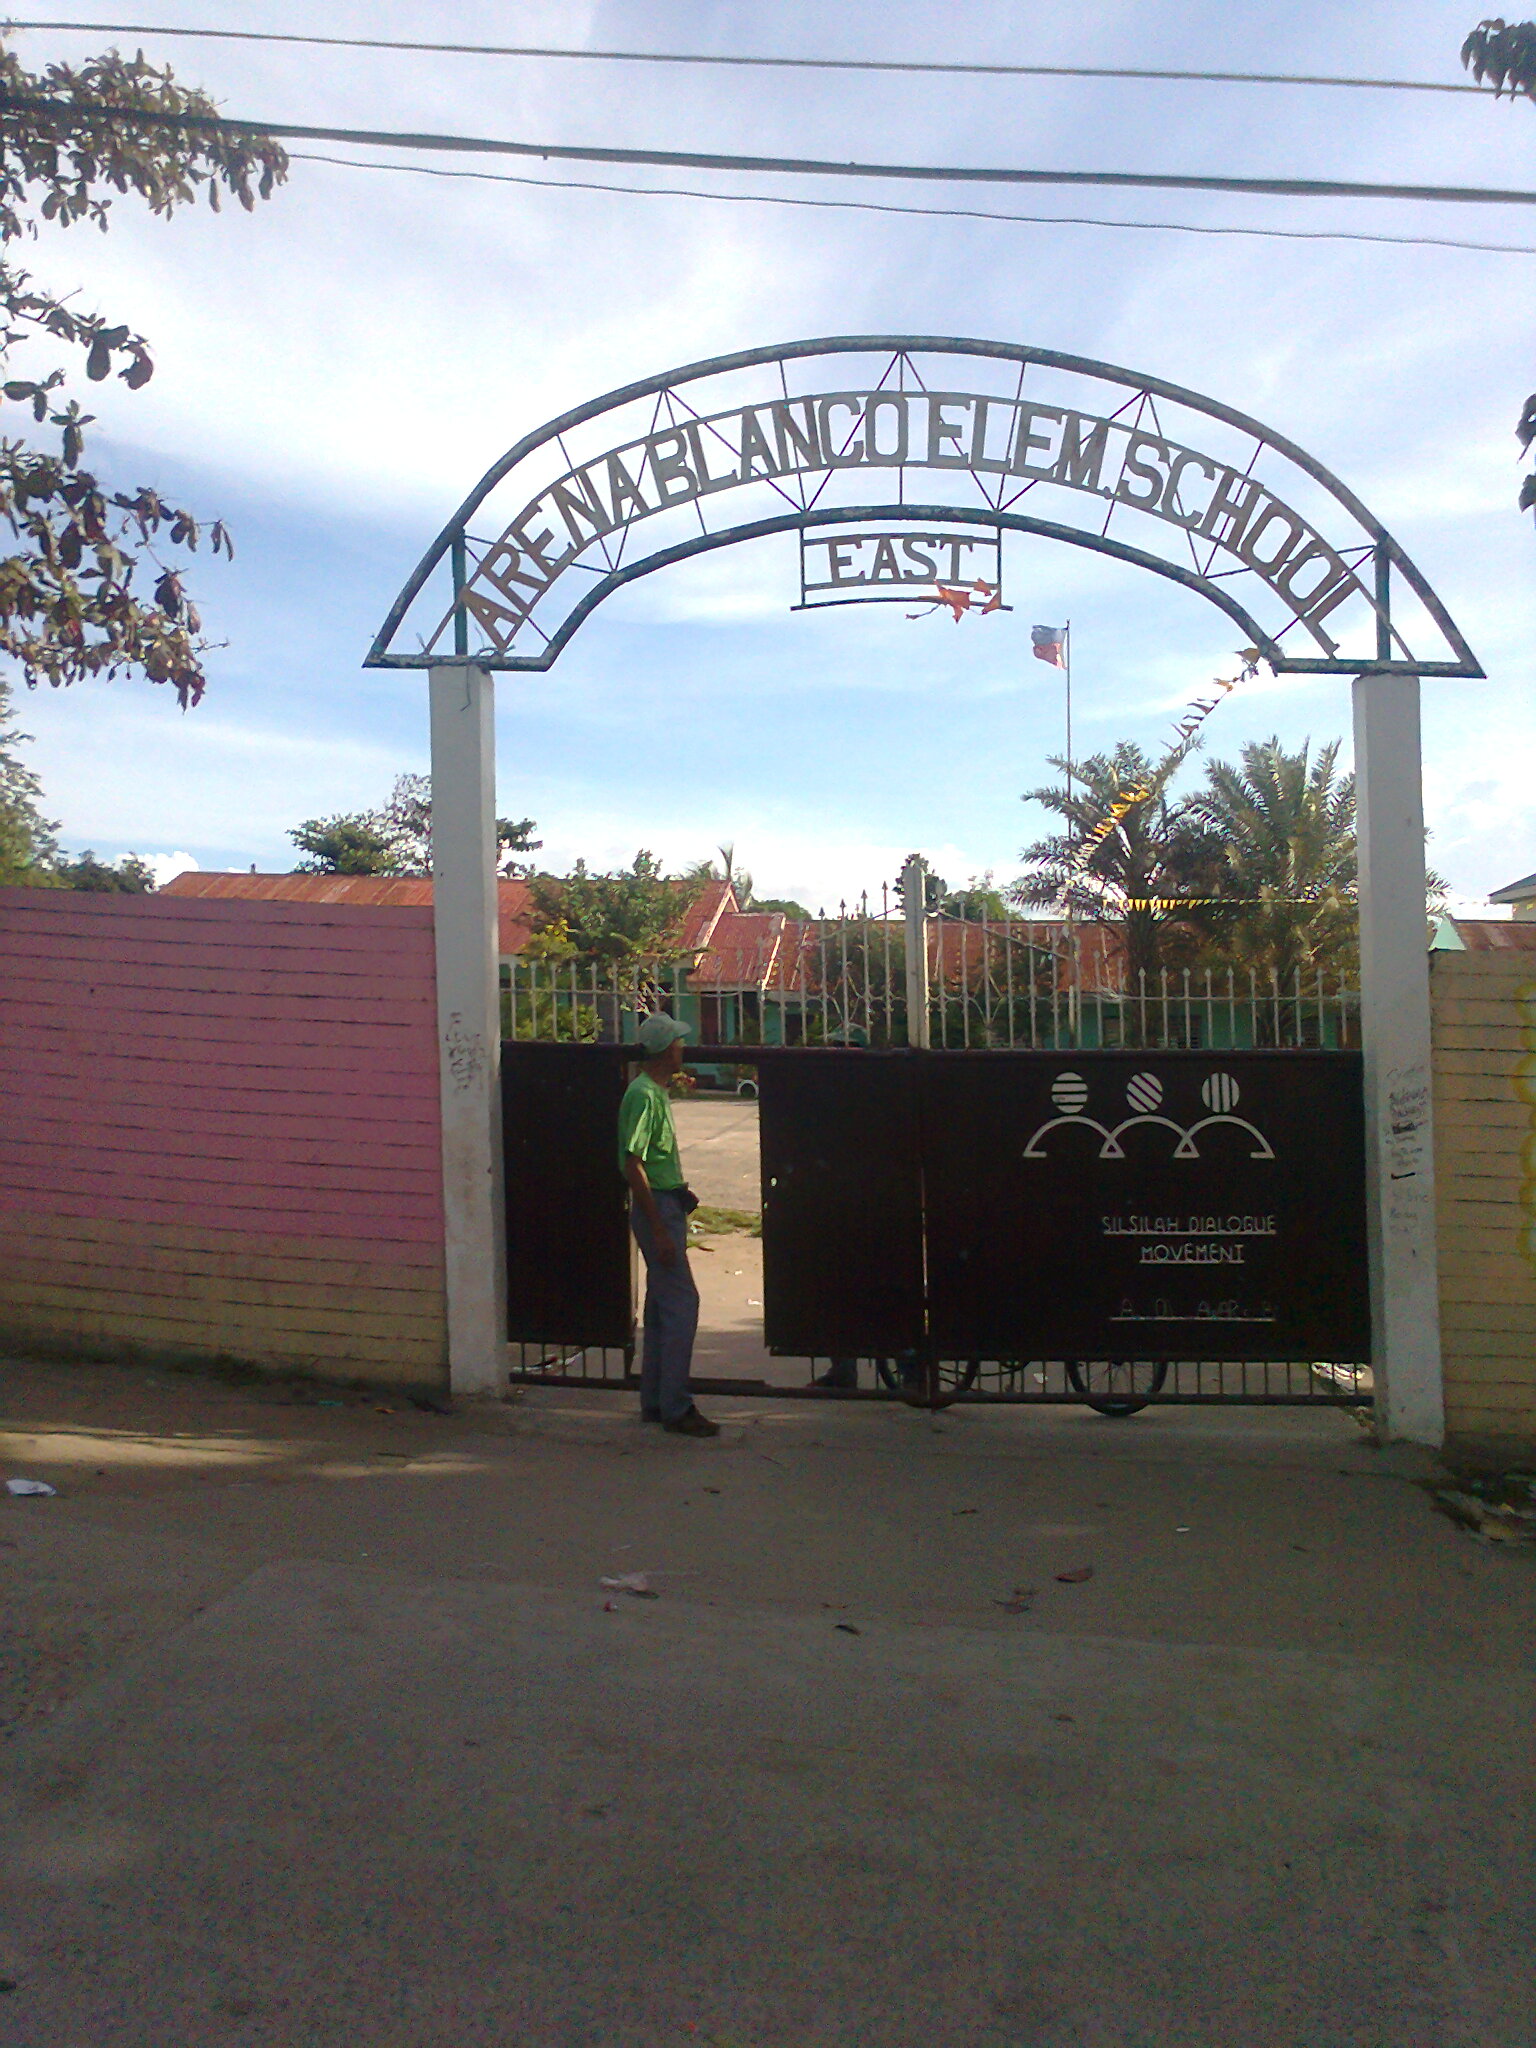 File:Arena blanco elementary school east arena blanco zamboanga city 1 ...